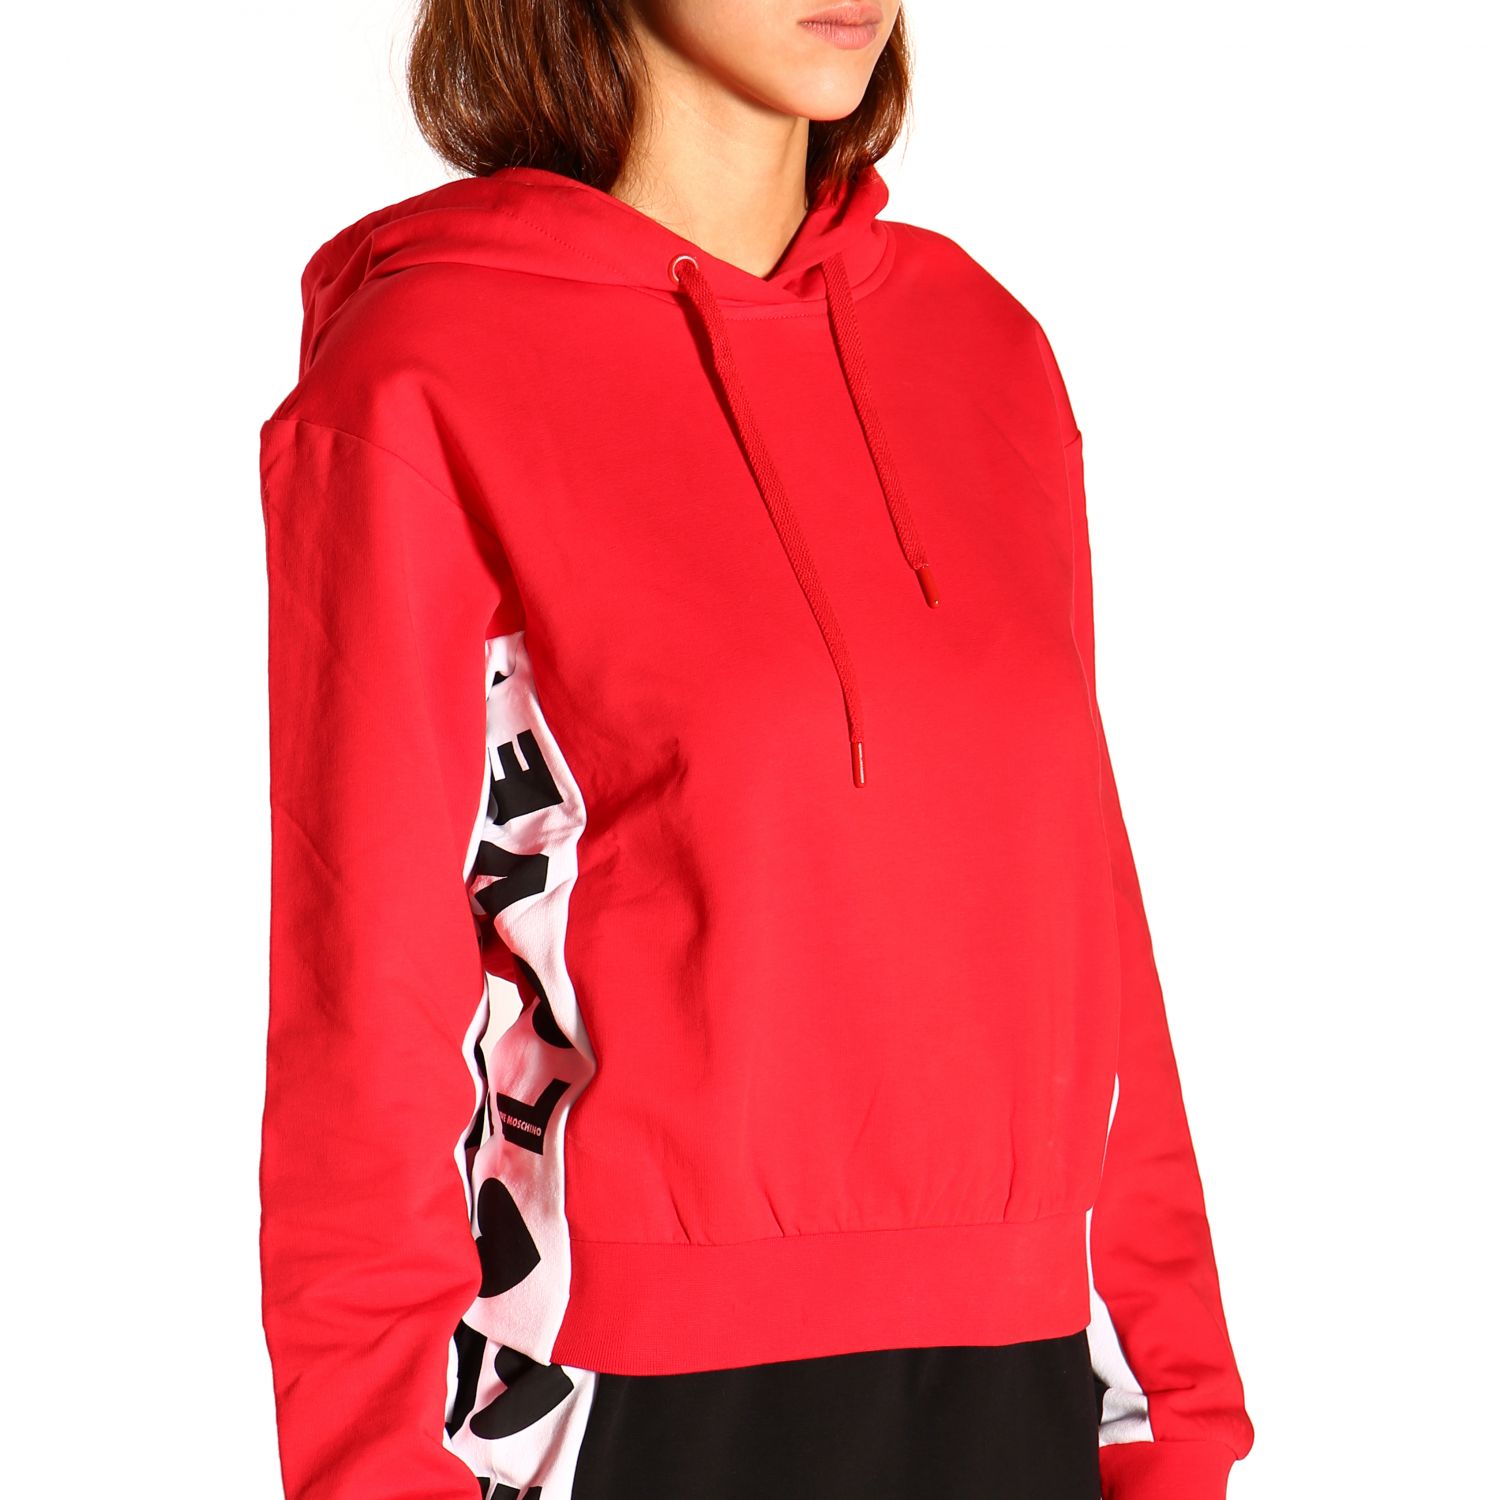 red moschino hoodie